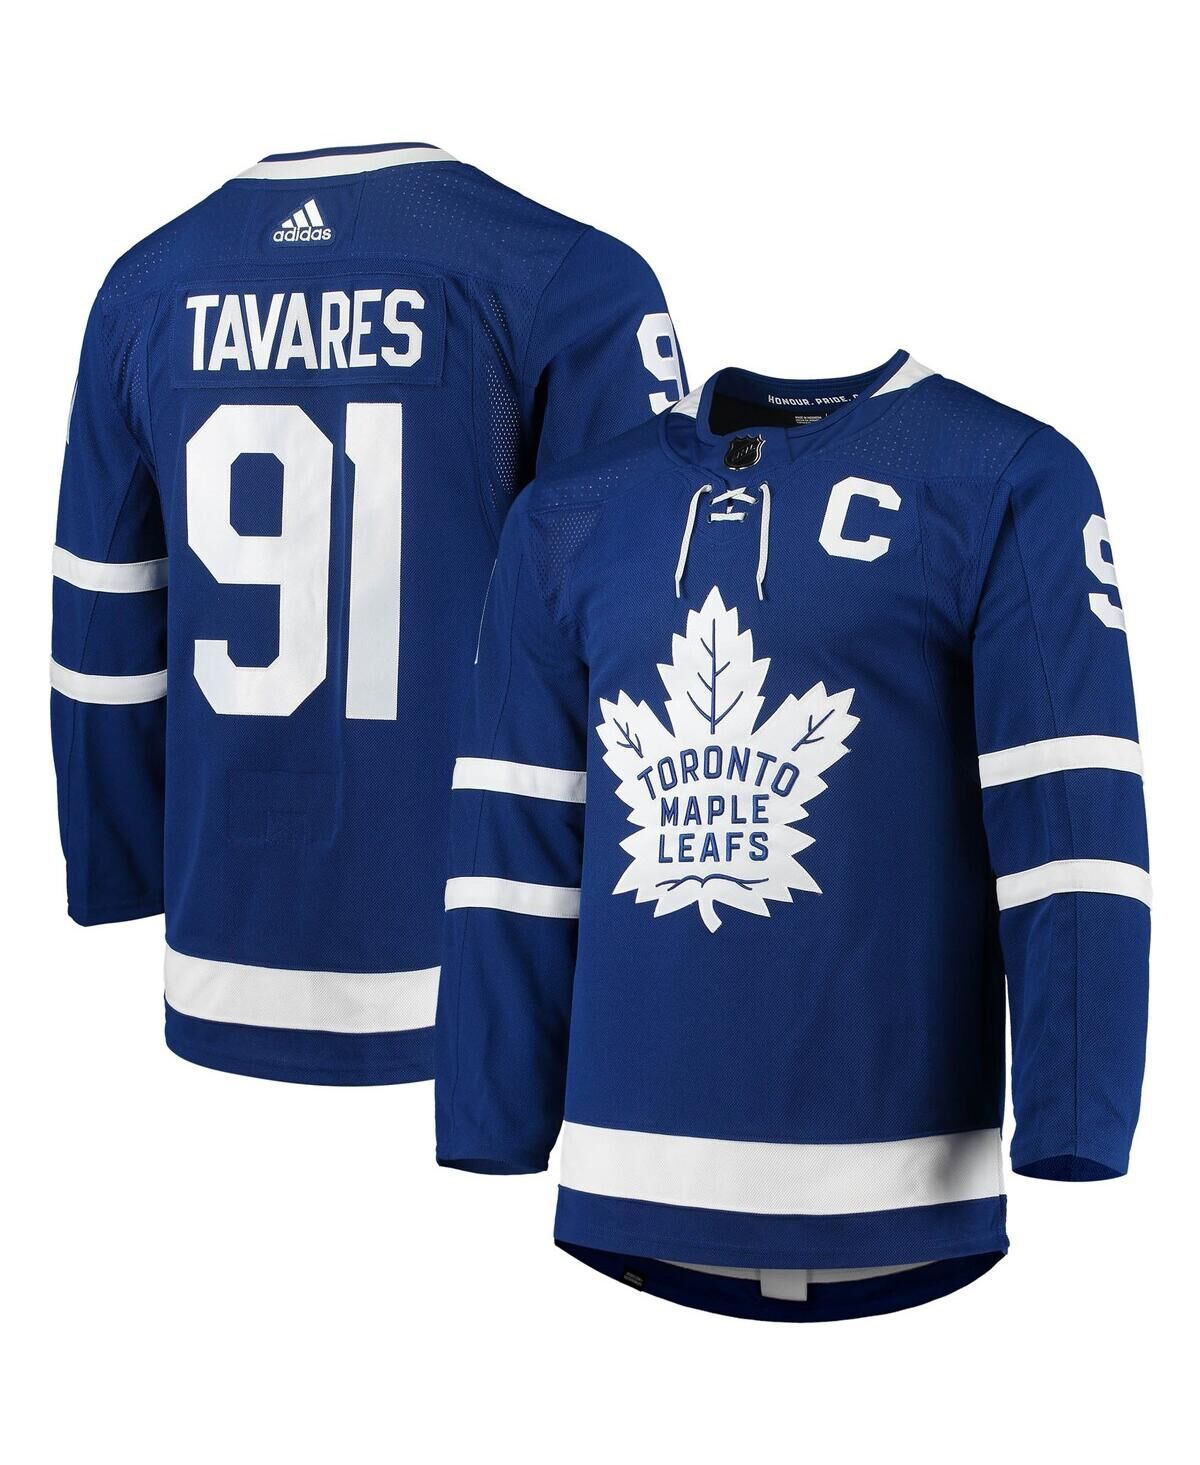 Adidas Men's adidas John Tavares Blue Toronto Maple Leafs Home Captain Patch Authentic Pro Player Jersey - Blue